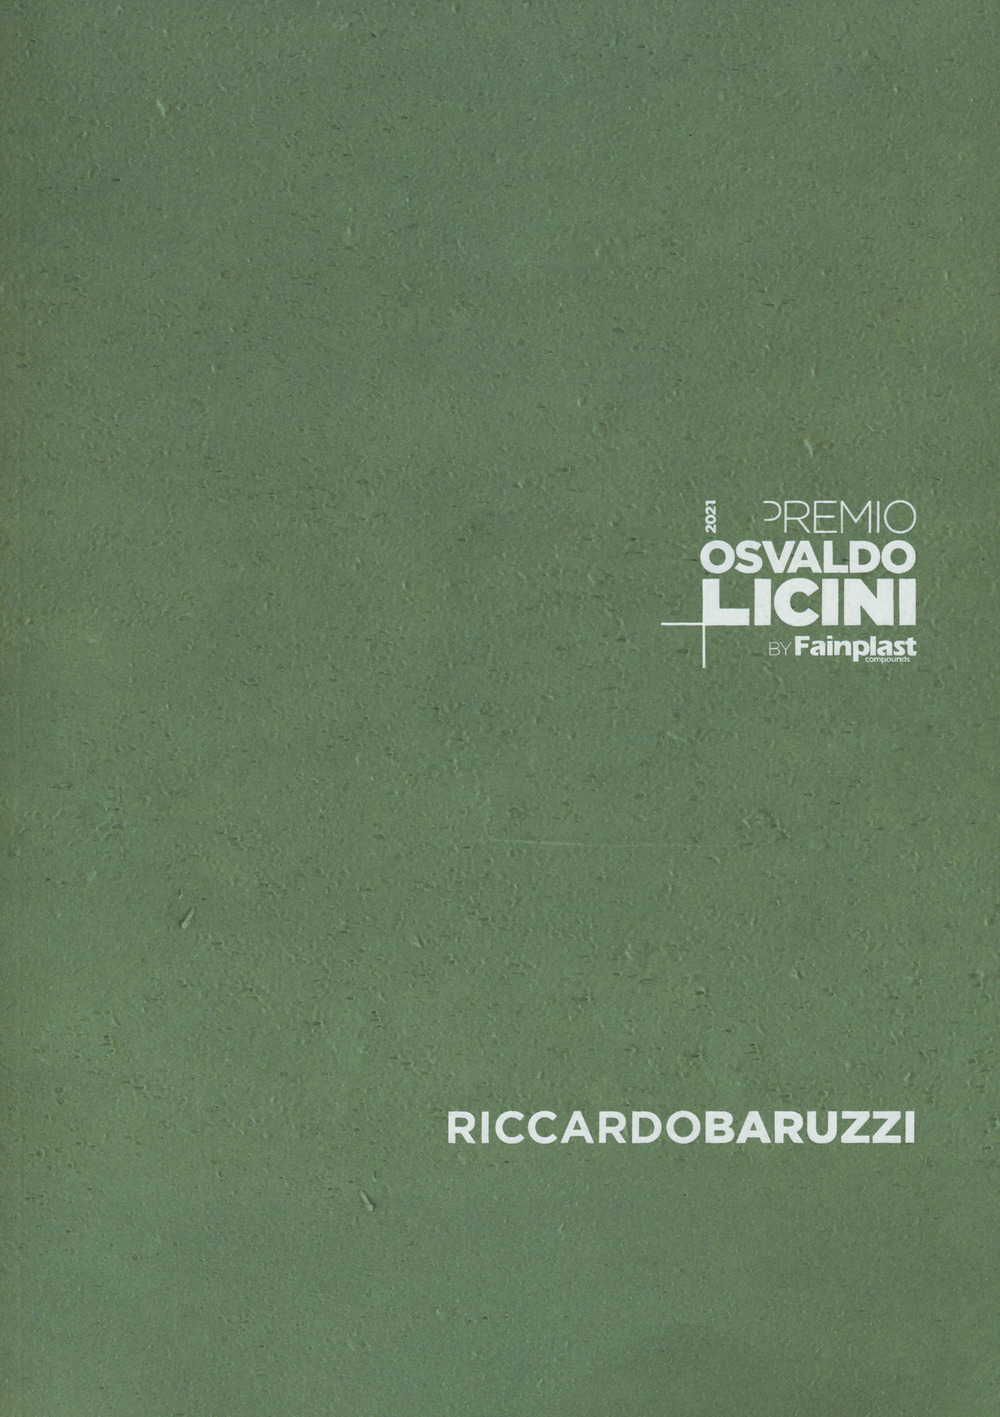 Premio Osvaldo Licini by Fainplast. 2022, Riccardo Baruzzi